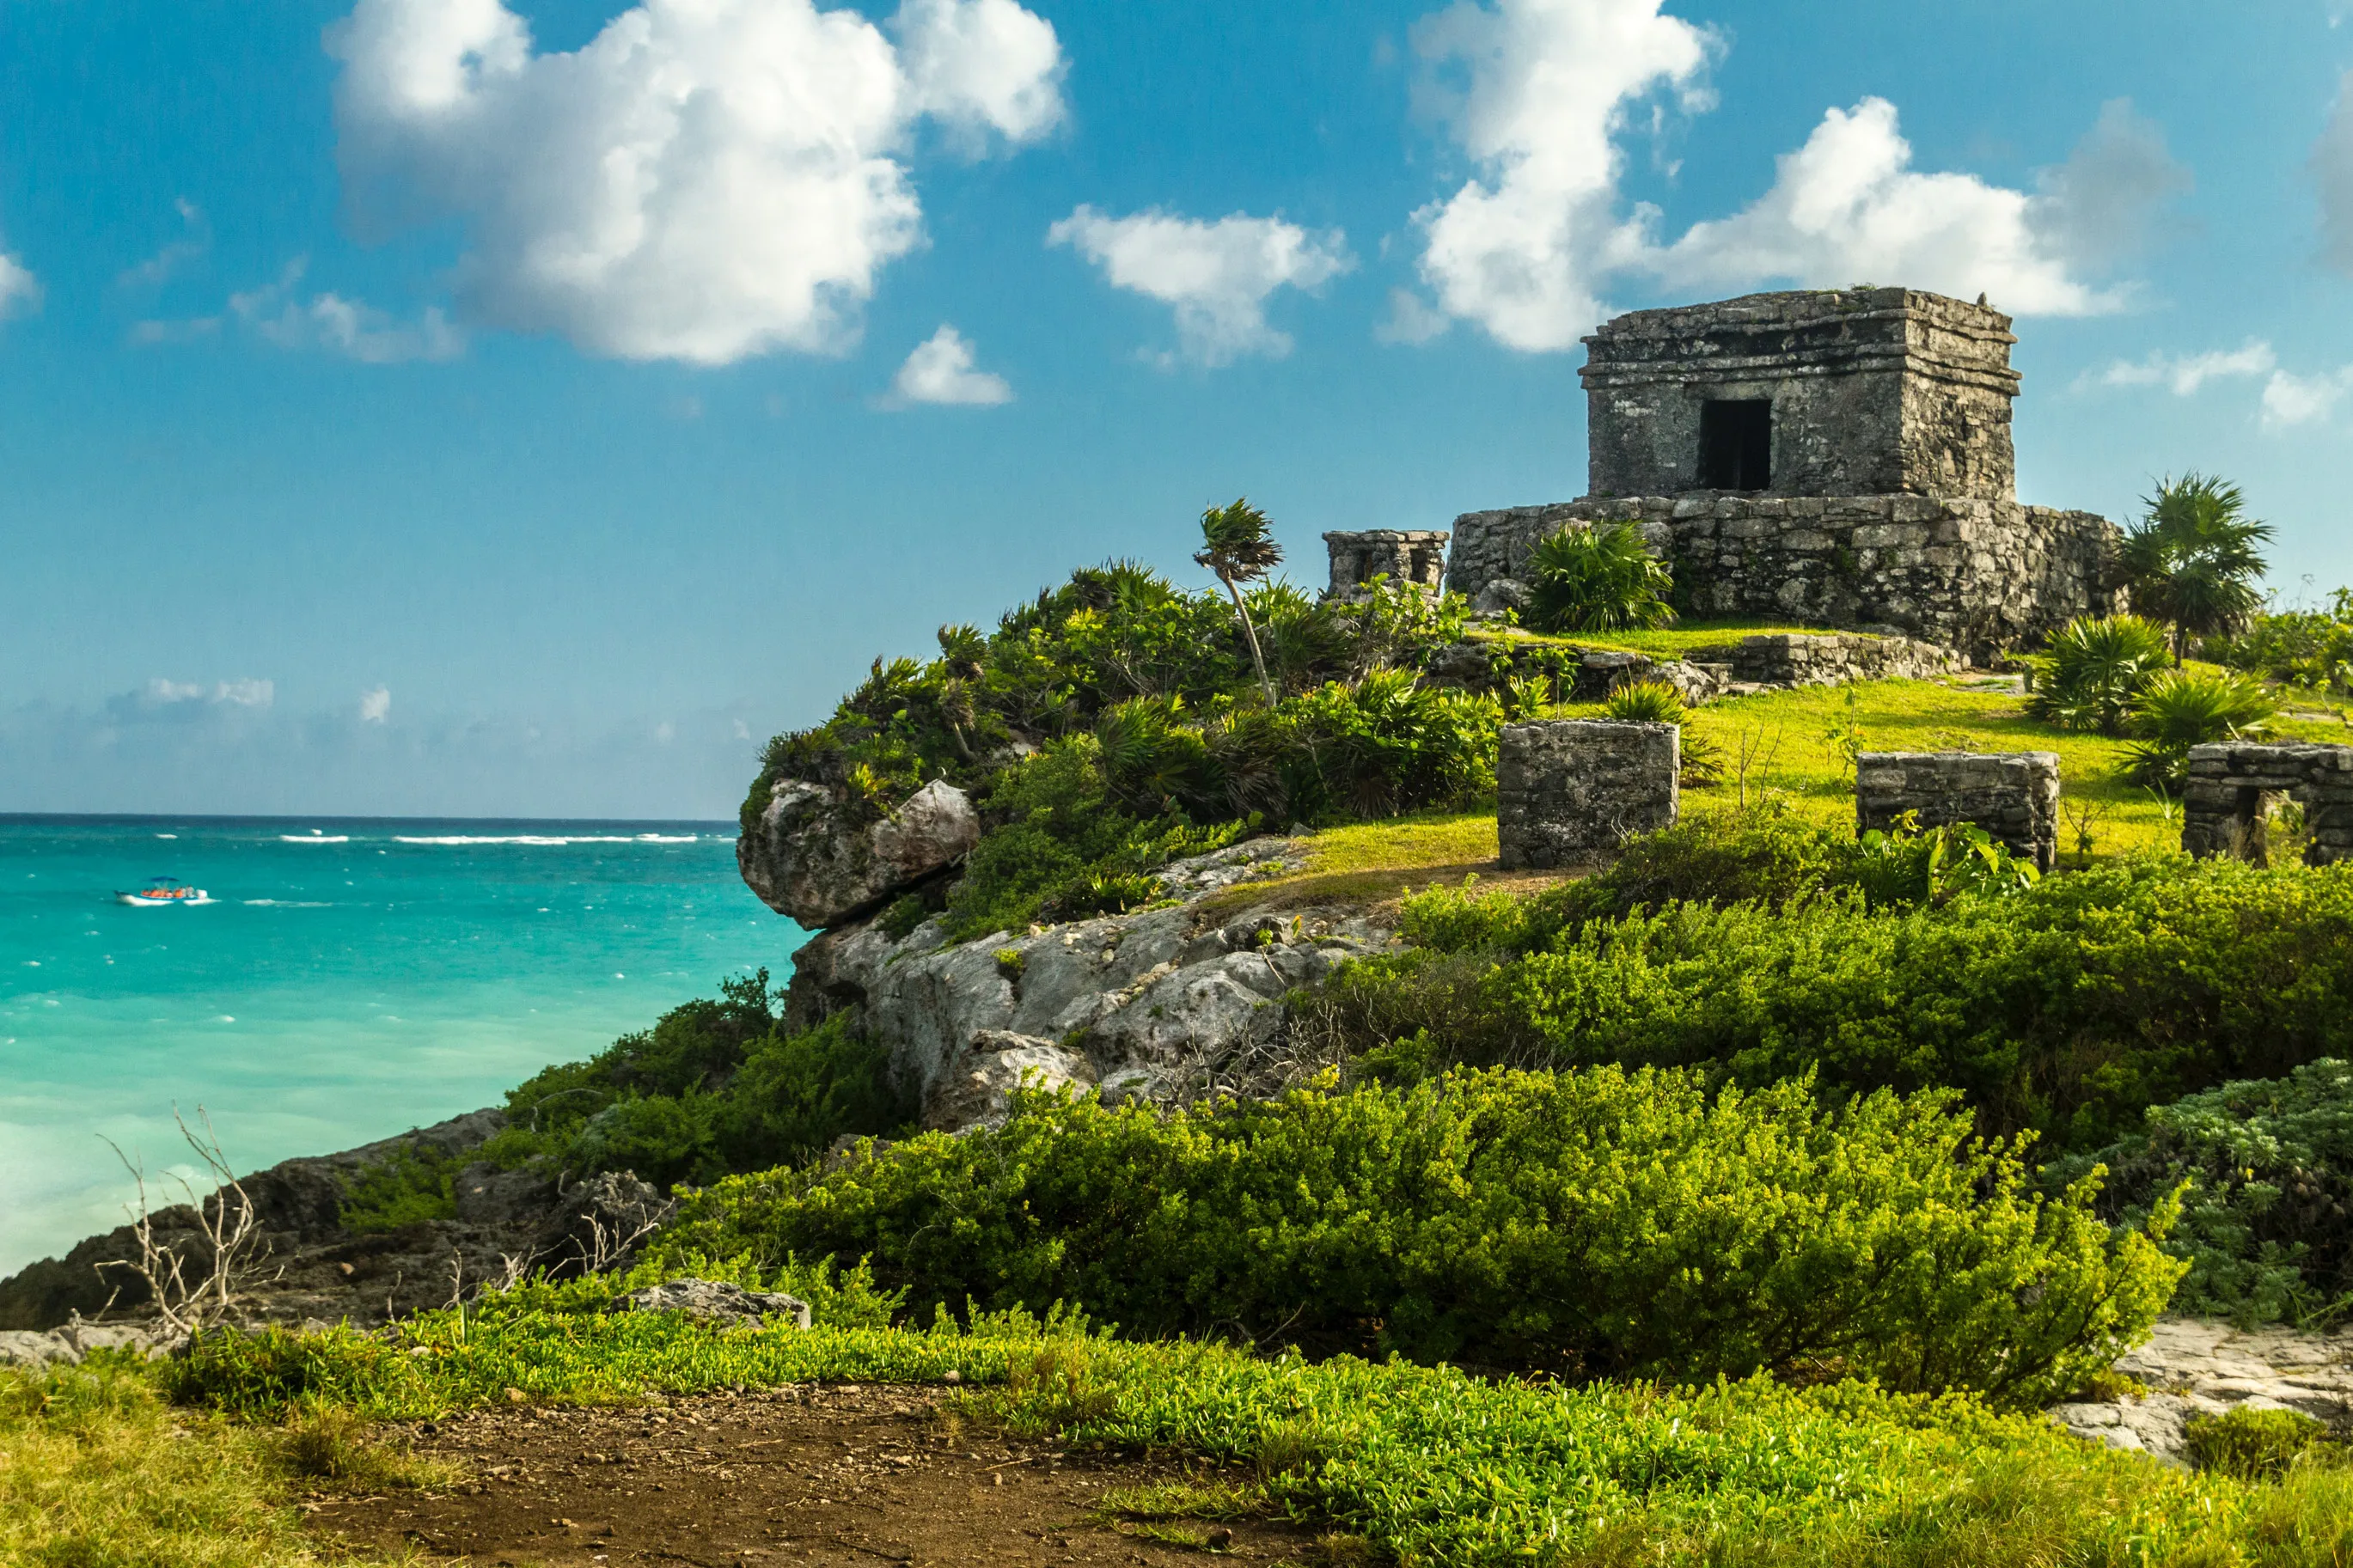 Tulum Mayan Ruins located at the shore of Tulum’s beach.